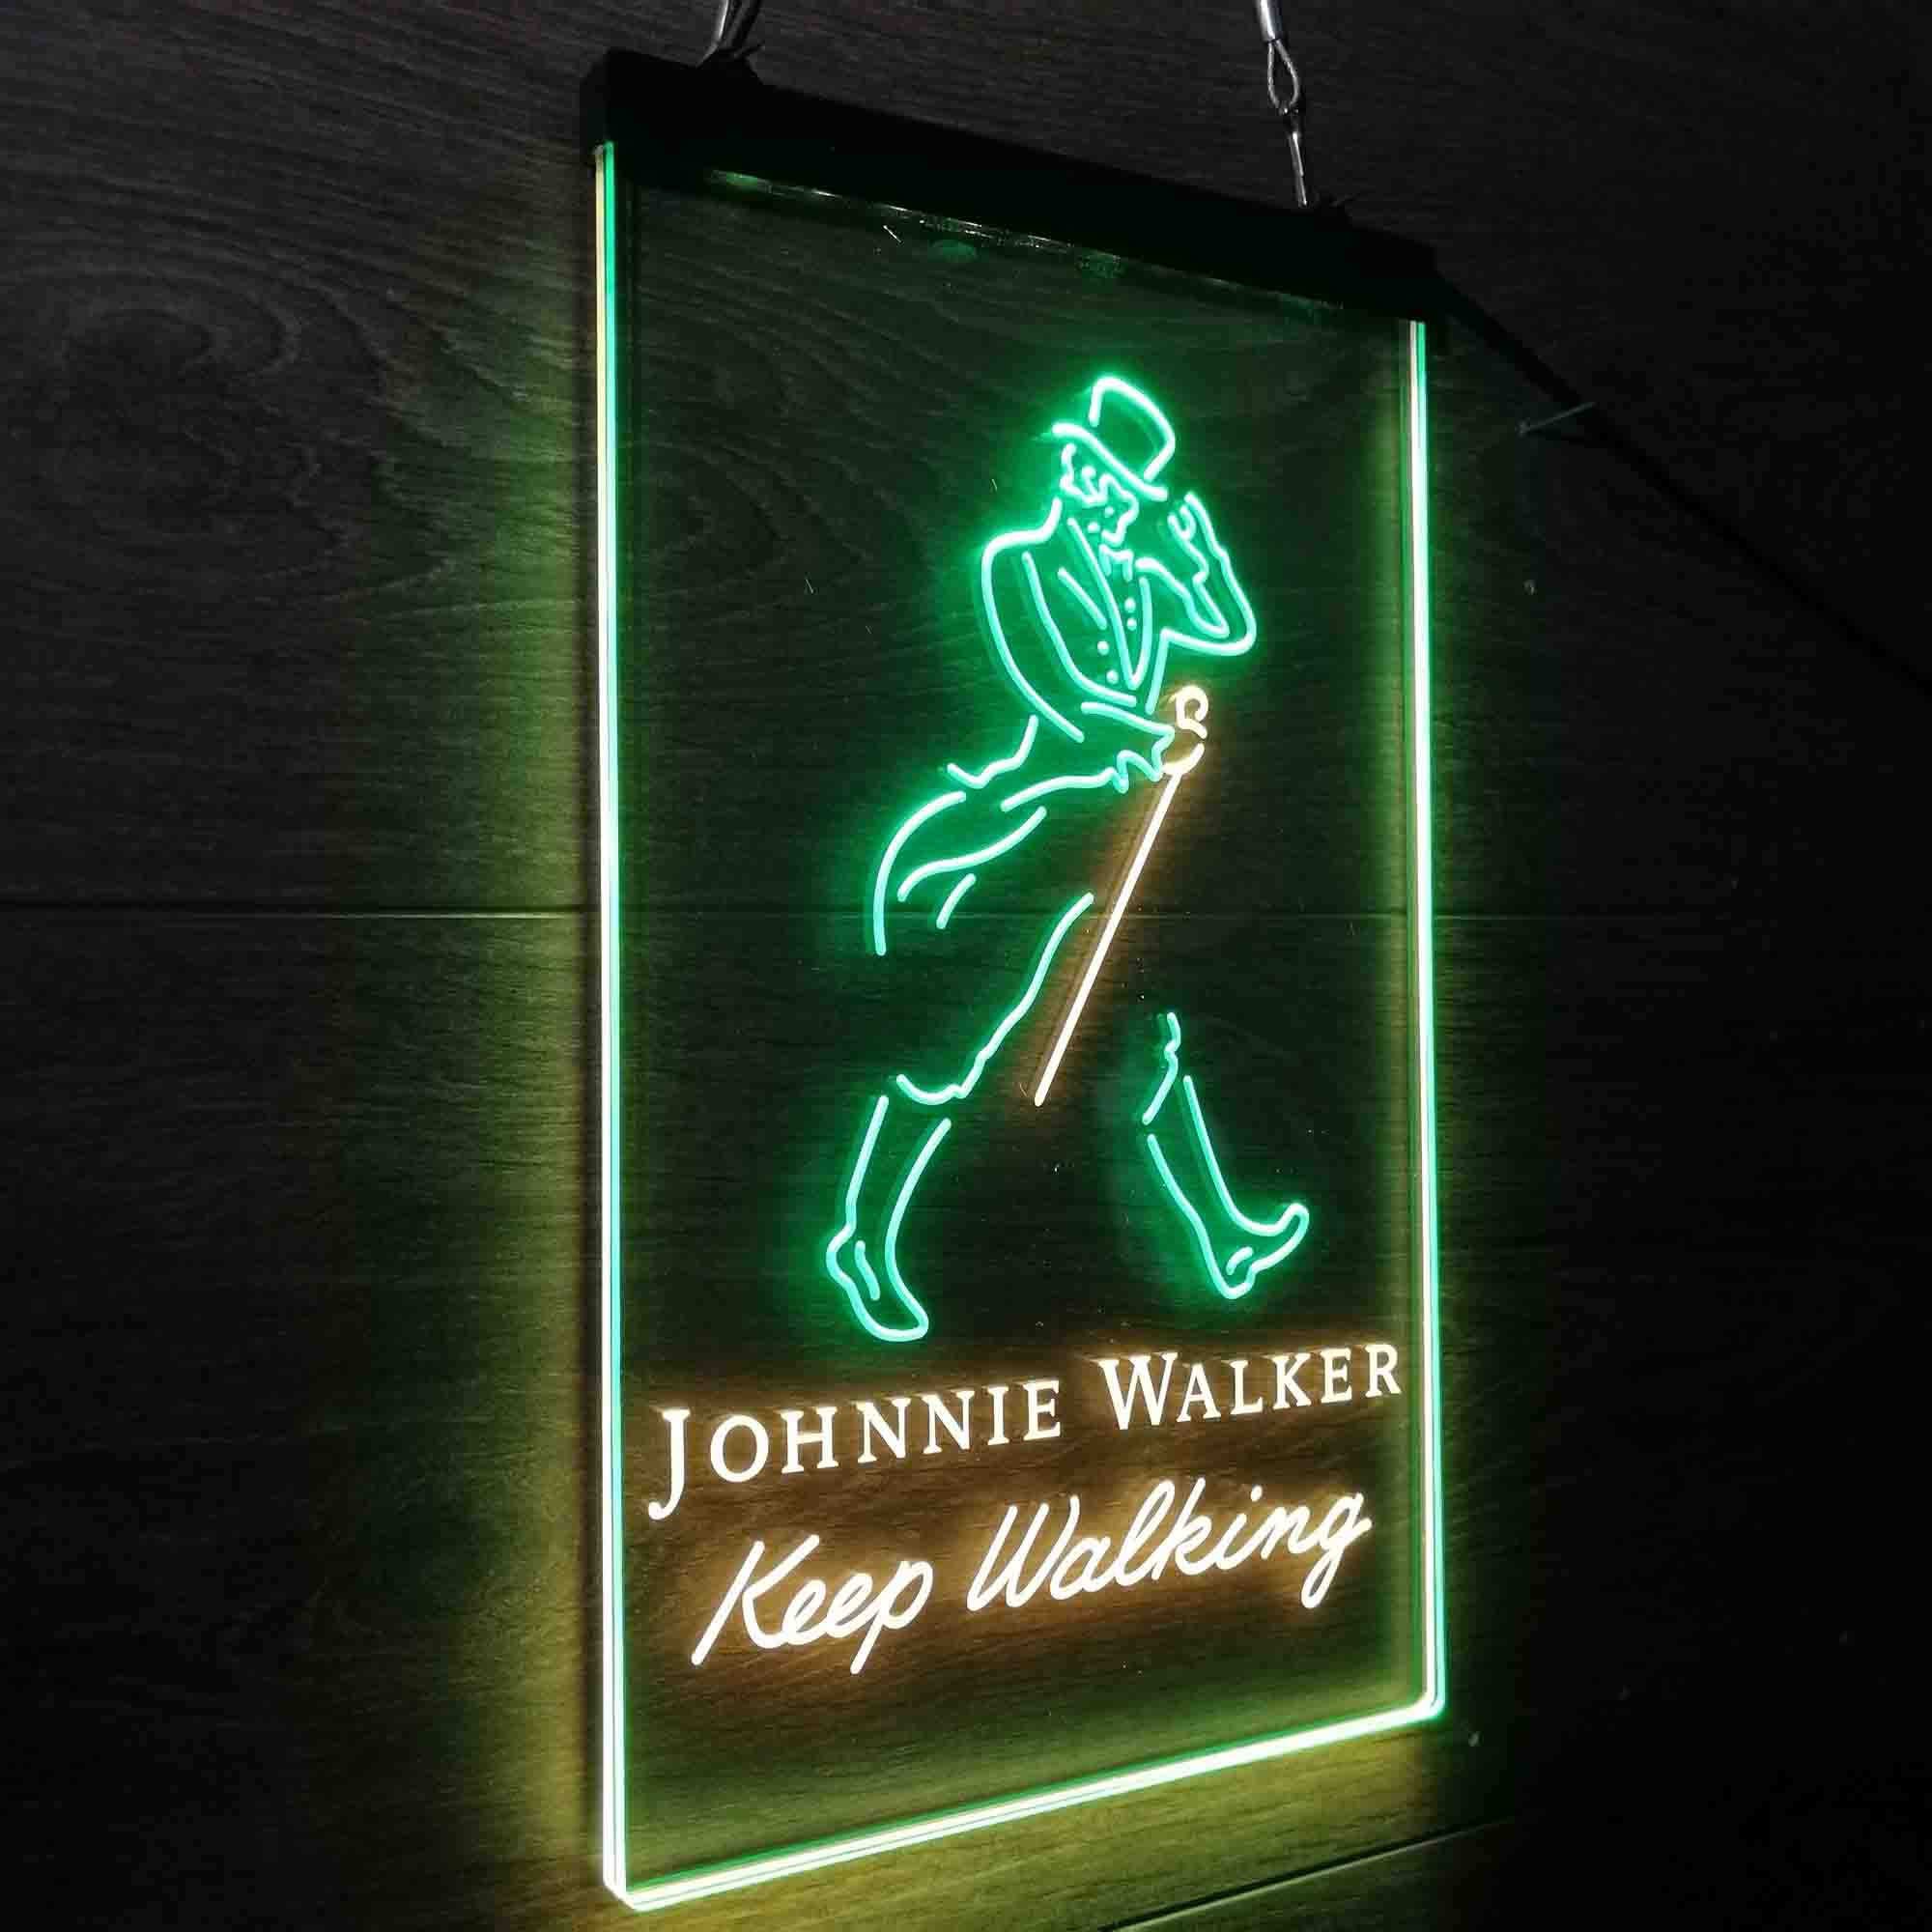 Jonnie Walker Man Cave Keep Walking Neon-Like LED Sign